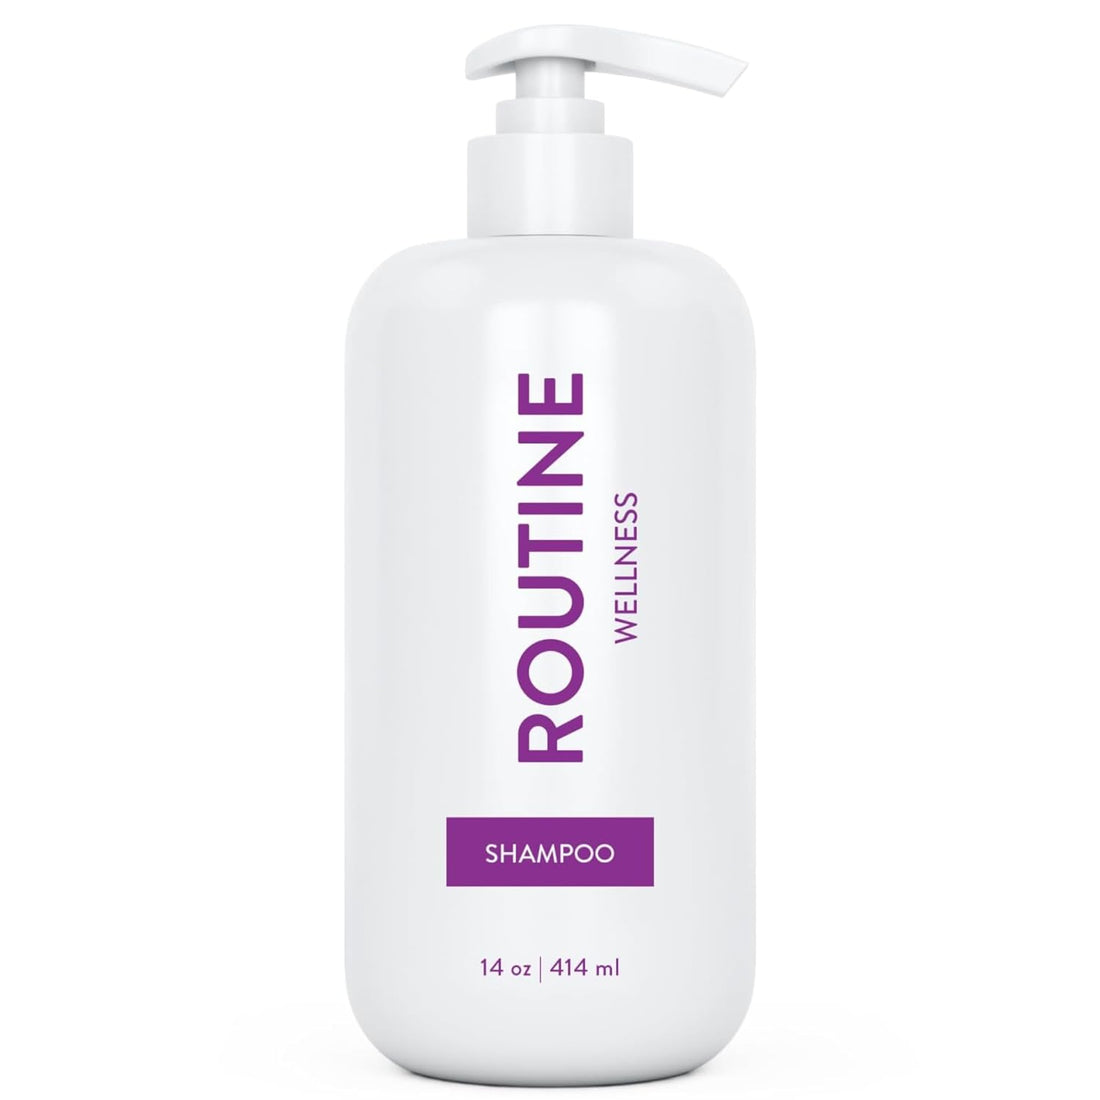 Shampoo for Stronger Hair - Vegan, All Natural Biotin Shampoo with Nourishing Oils and Vitamins - Rose Hips - 14Oz